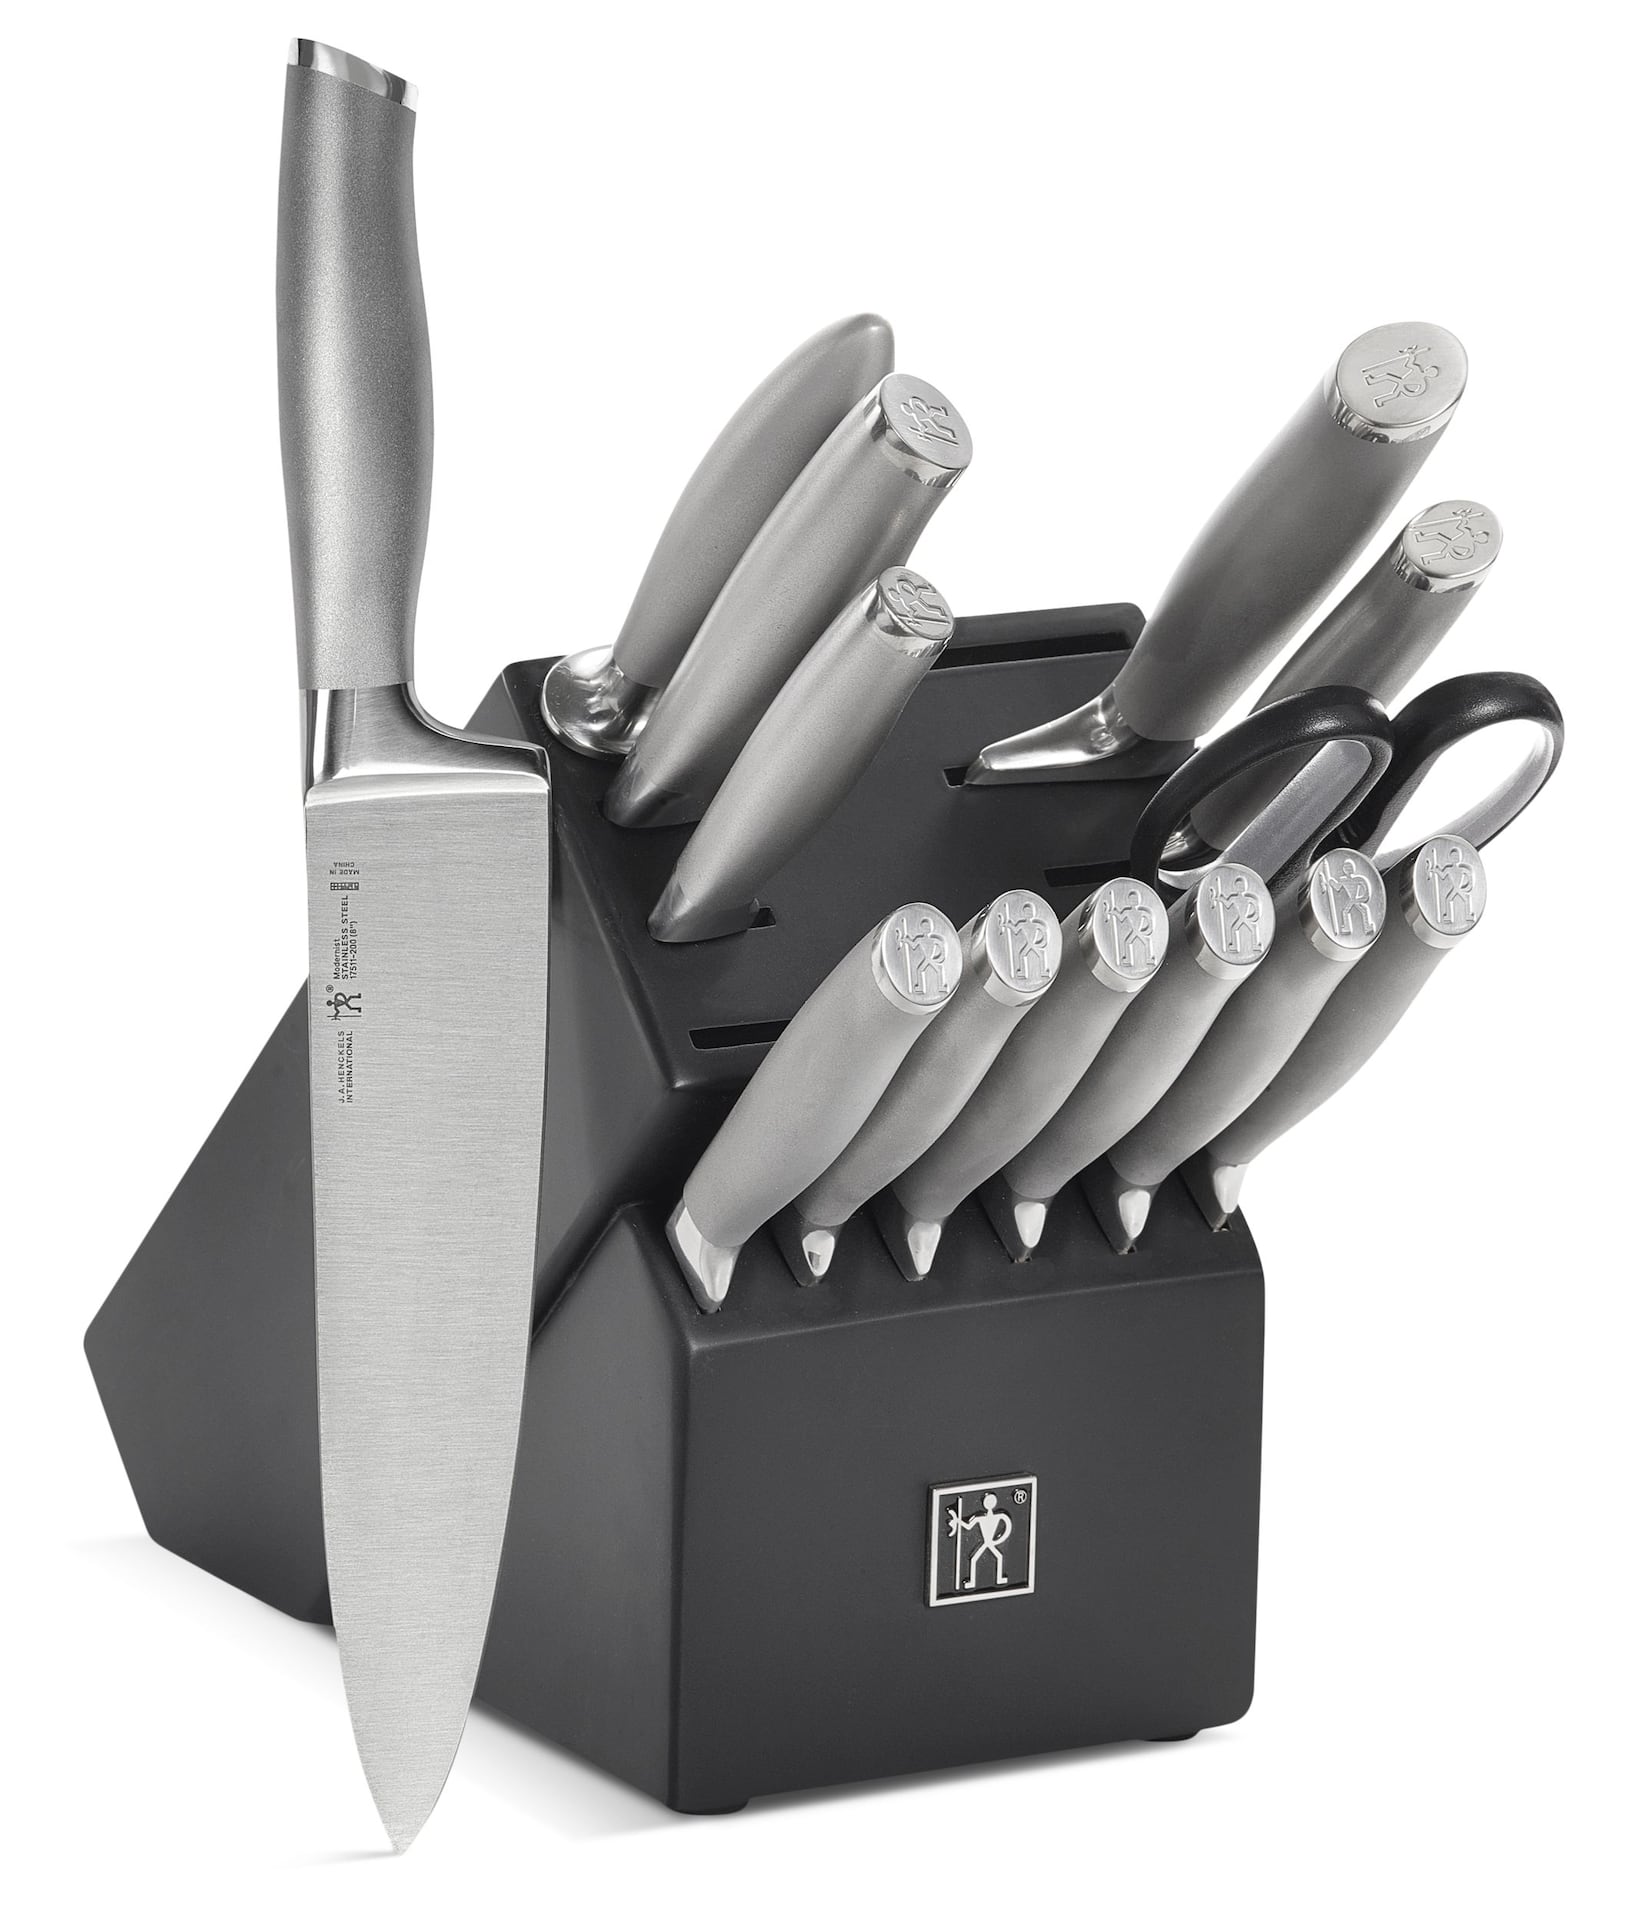 J.A. Henckels Modernist 7-Pc Self-Sharpening Knife Block Set